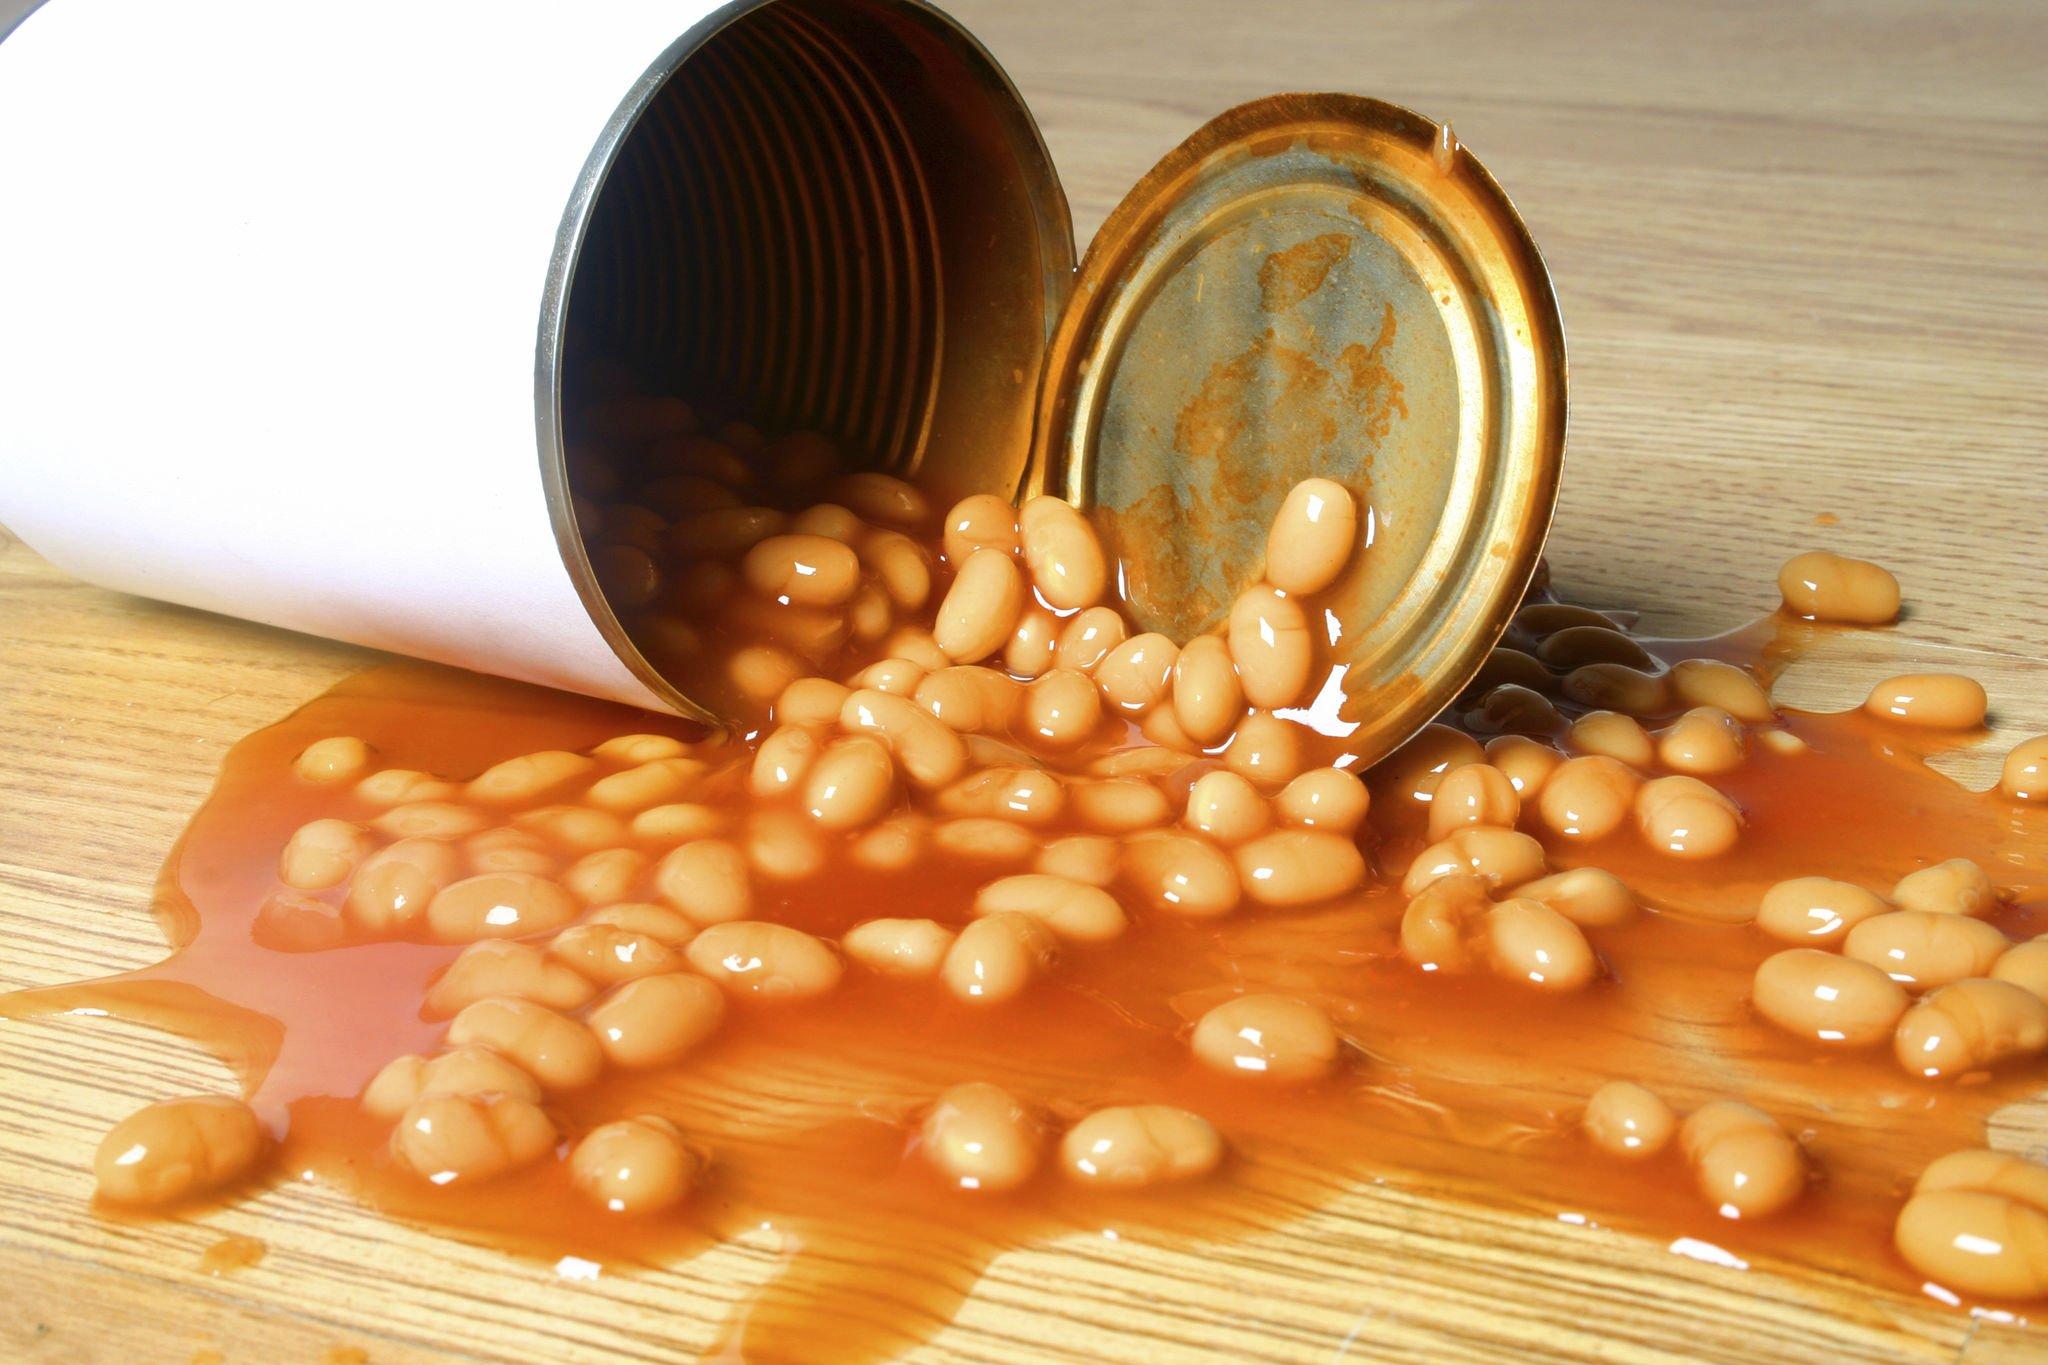 spill the beans